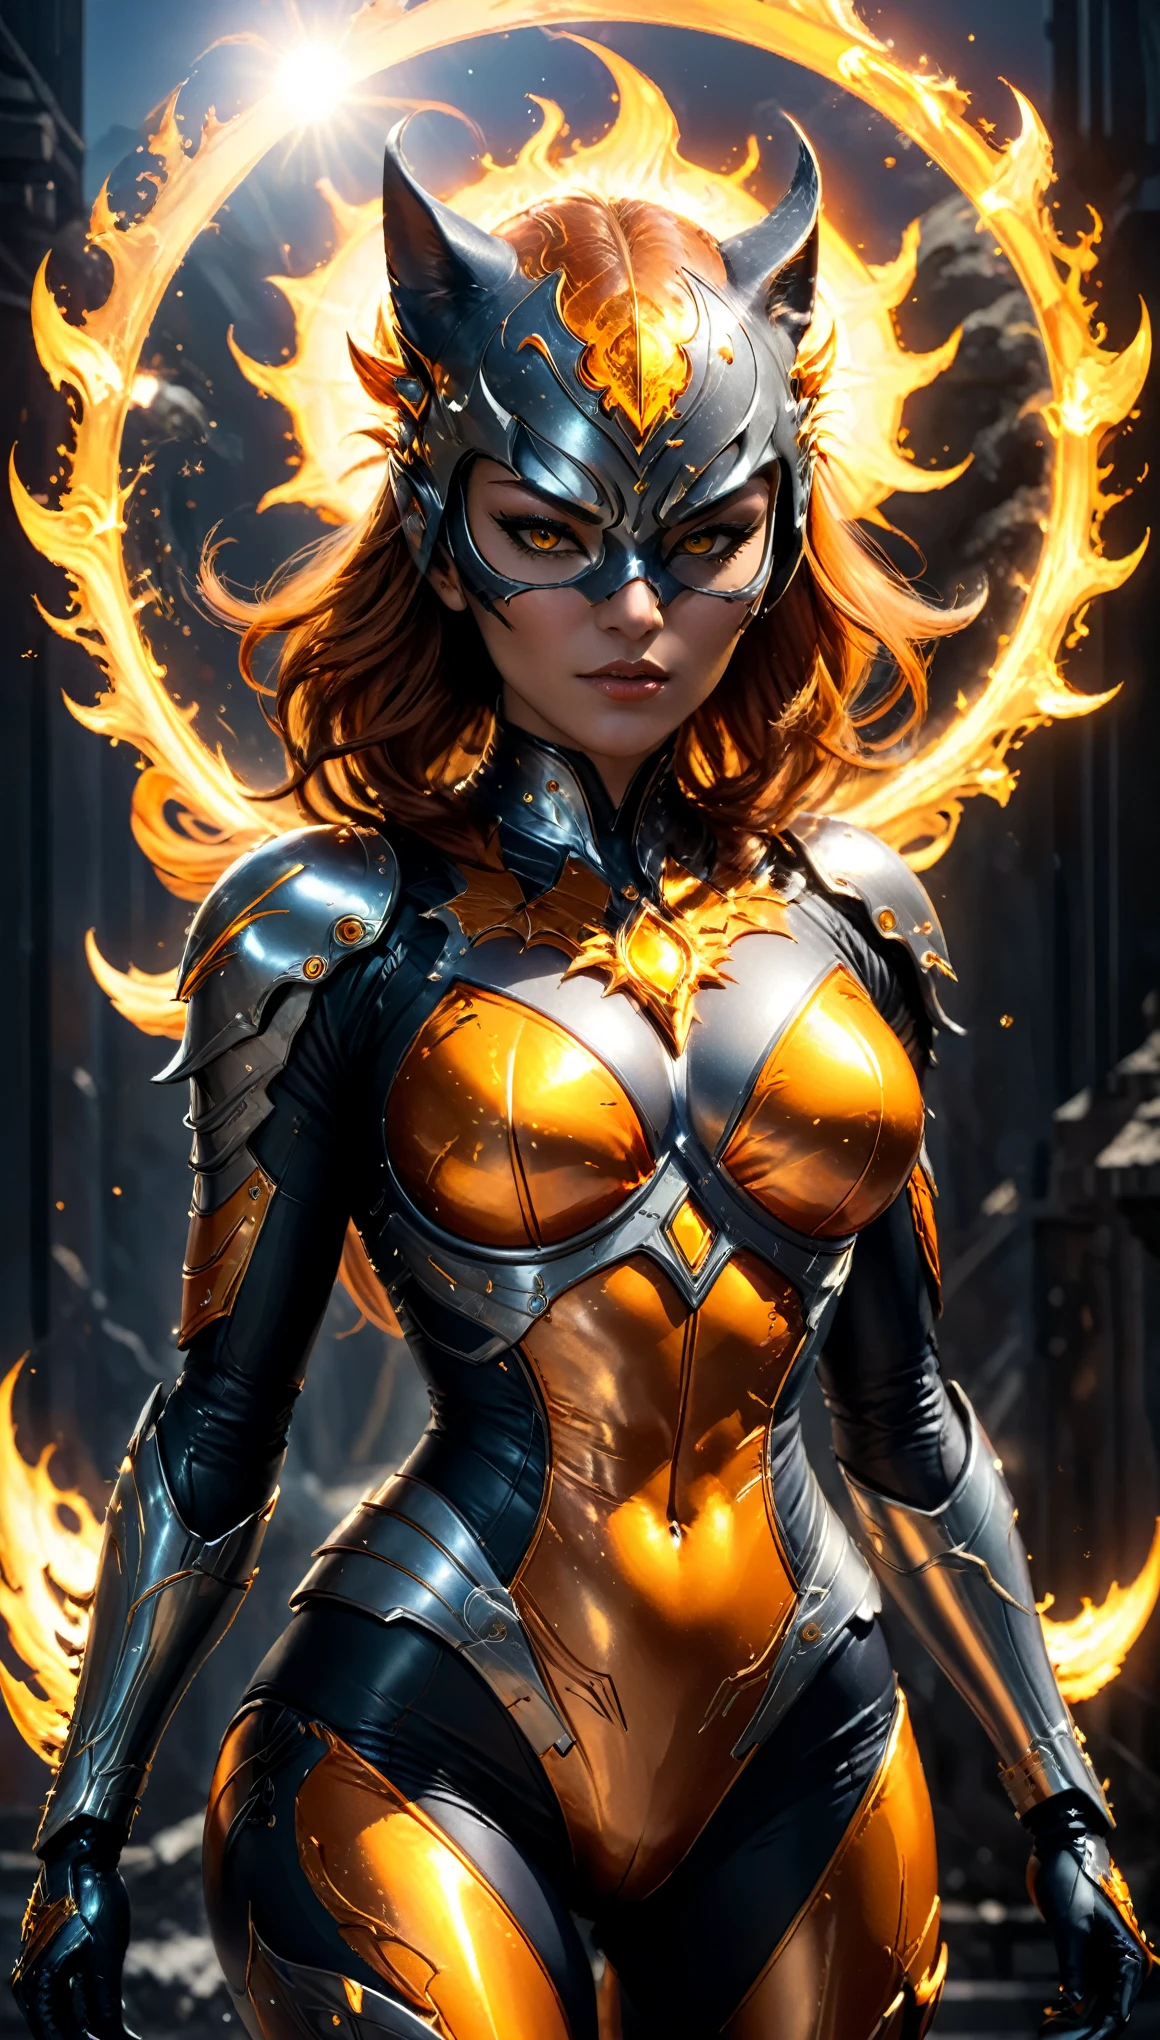 Guild Wars 태양 악마 Catwoman은 상징적인 악당의 태양 악마 테마 버전입니다., 오렌지색과 은색 의상을 입고, 태양의 힘을 보여주기 위해 디자인된 그녀의 슈트, 태양신과 슈퍼악마의 융합을 형상화. 역동적인 액션 포즈. (((걸작, 복잡한 세부 사항, 운동의, 메가픽셀, 완벽한 빛, 광선 추적 반사))), 시네마틱, 사진, 개념 미술, 다크 판타지